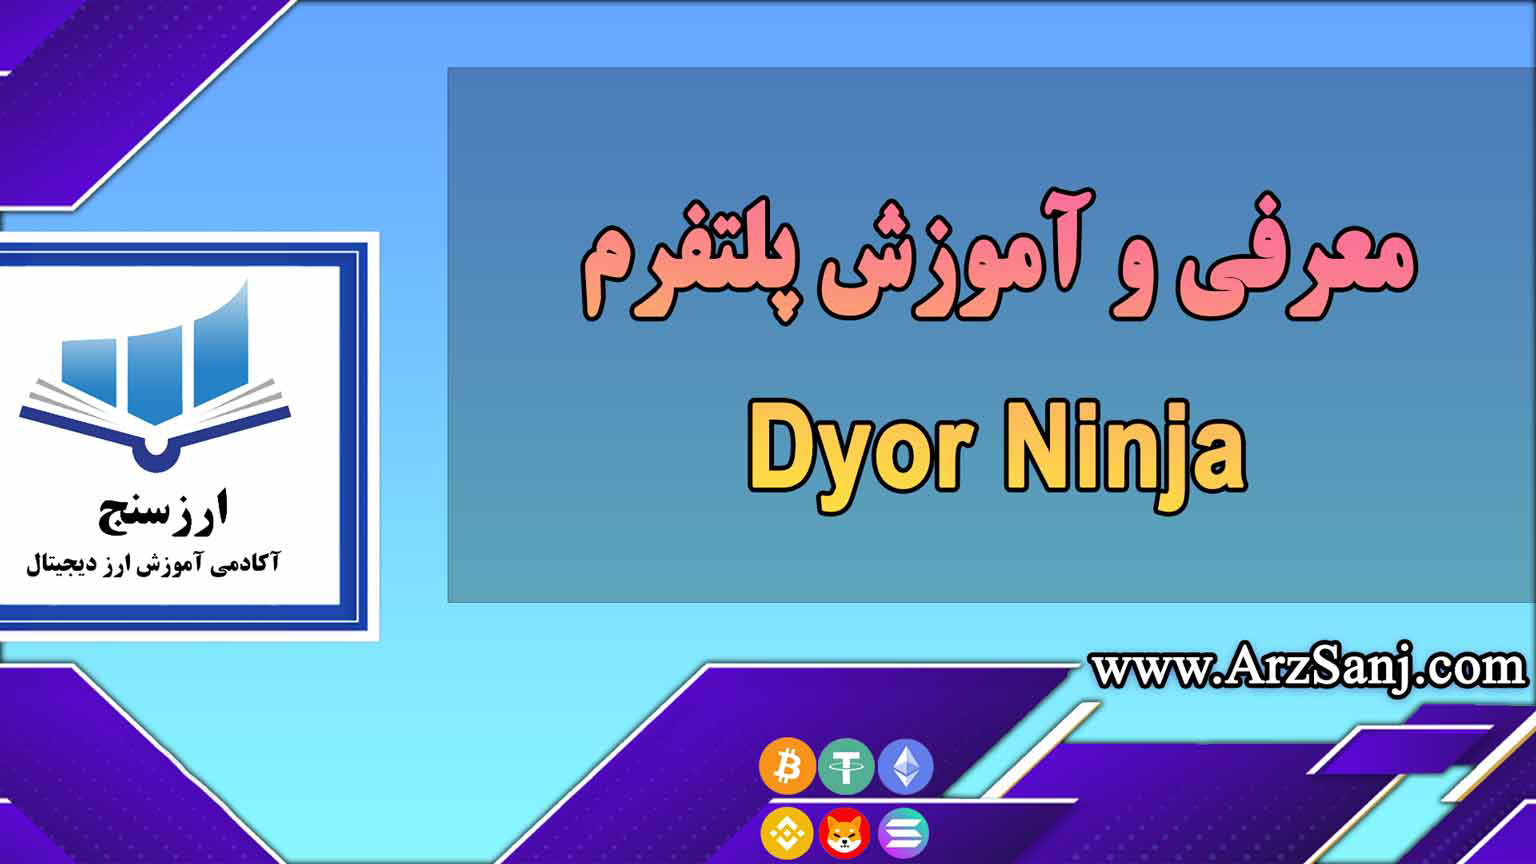 معرفی و آموزش پلتفرم Dyor Ninja